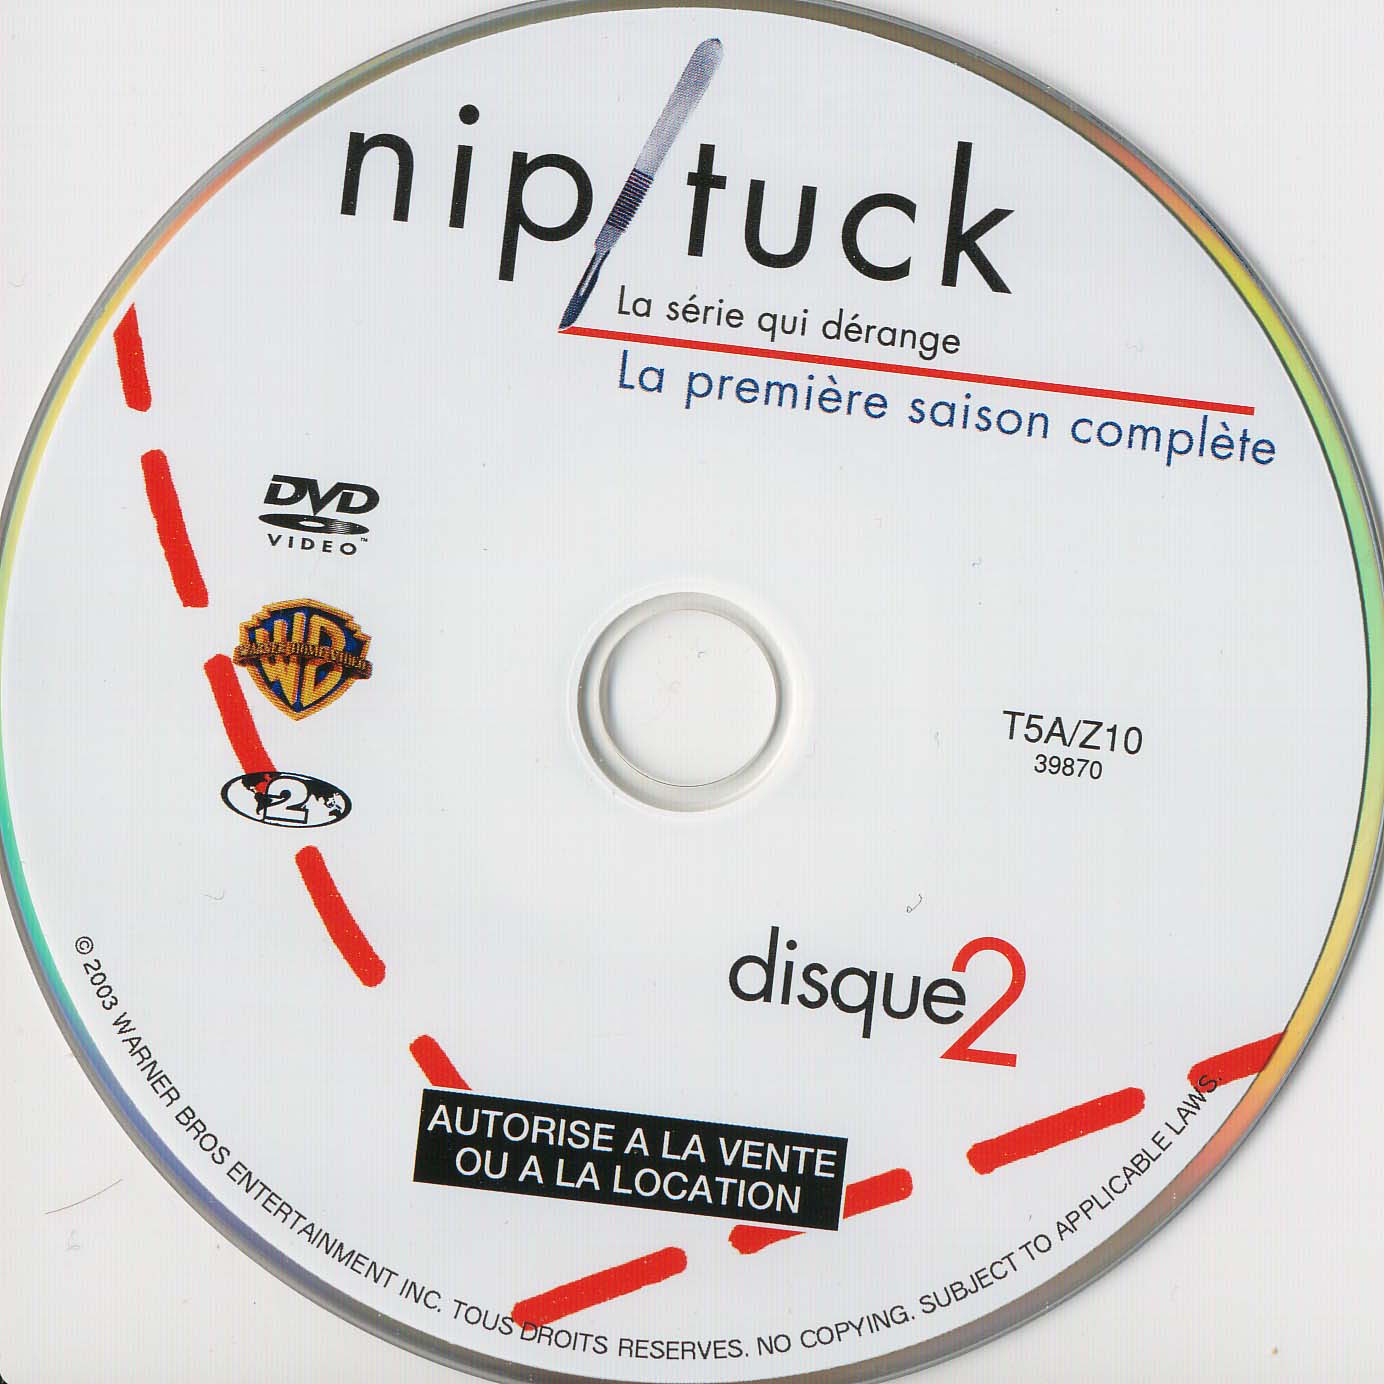 Nip-Tuck saison 1 dvd 2